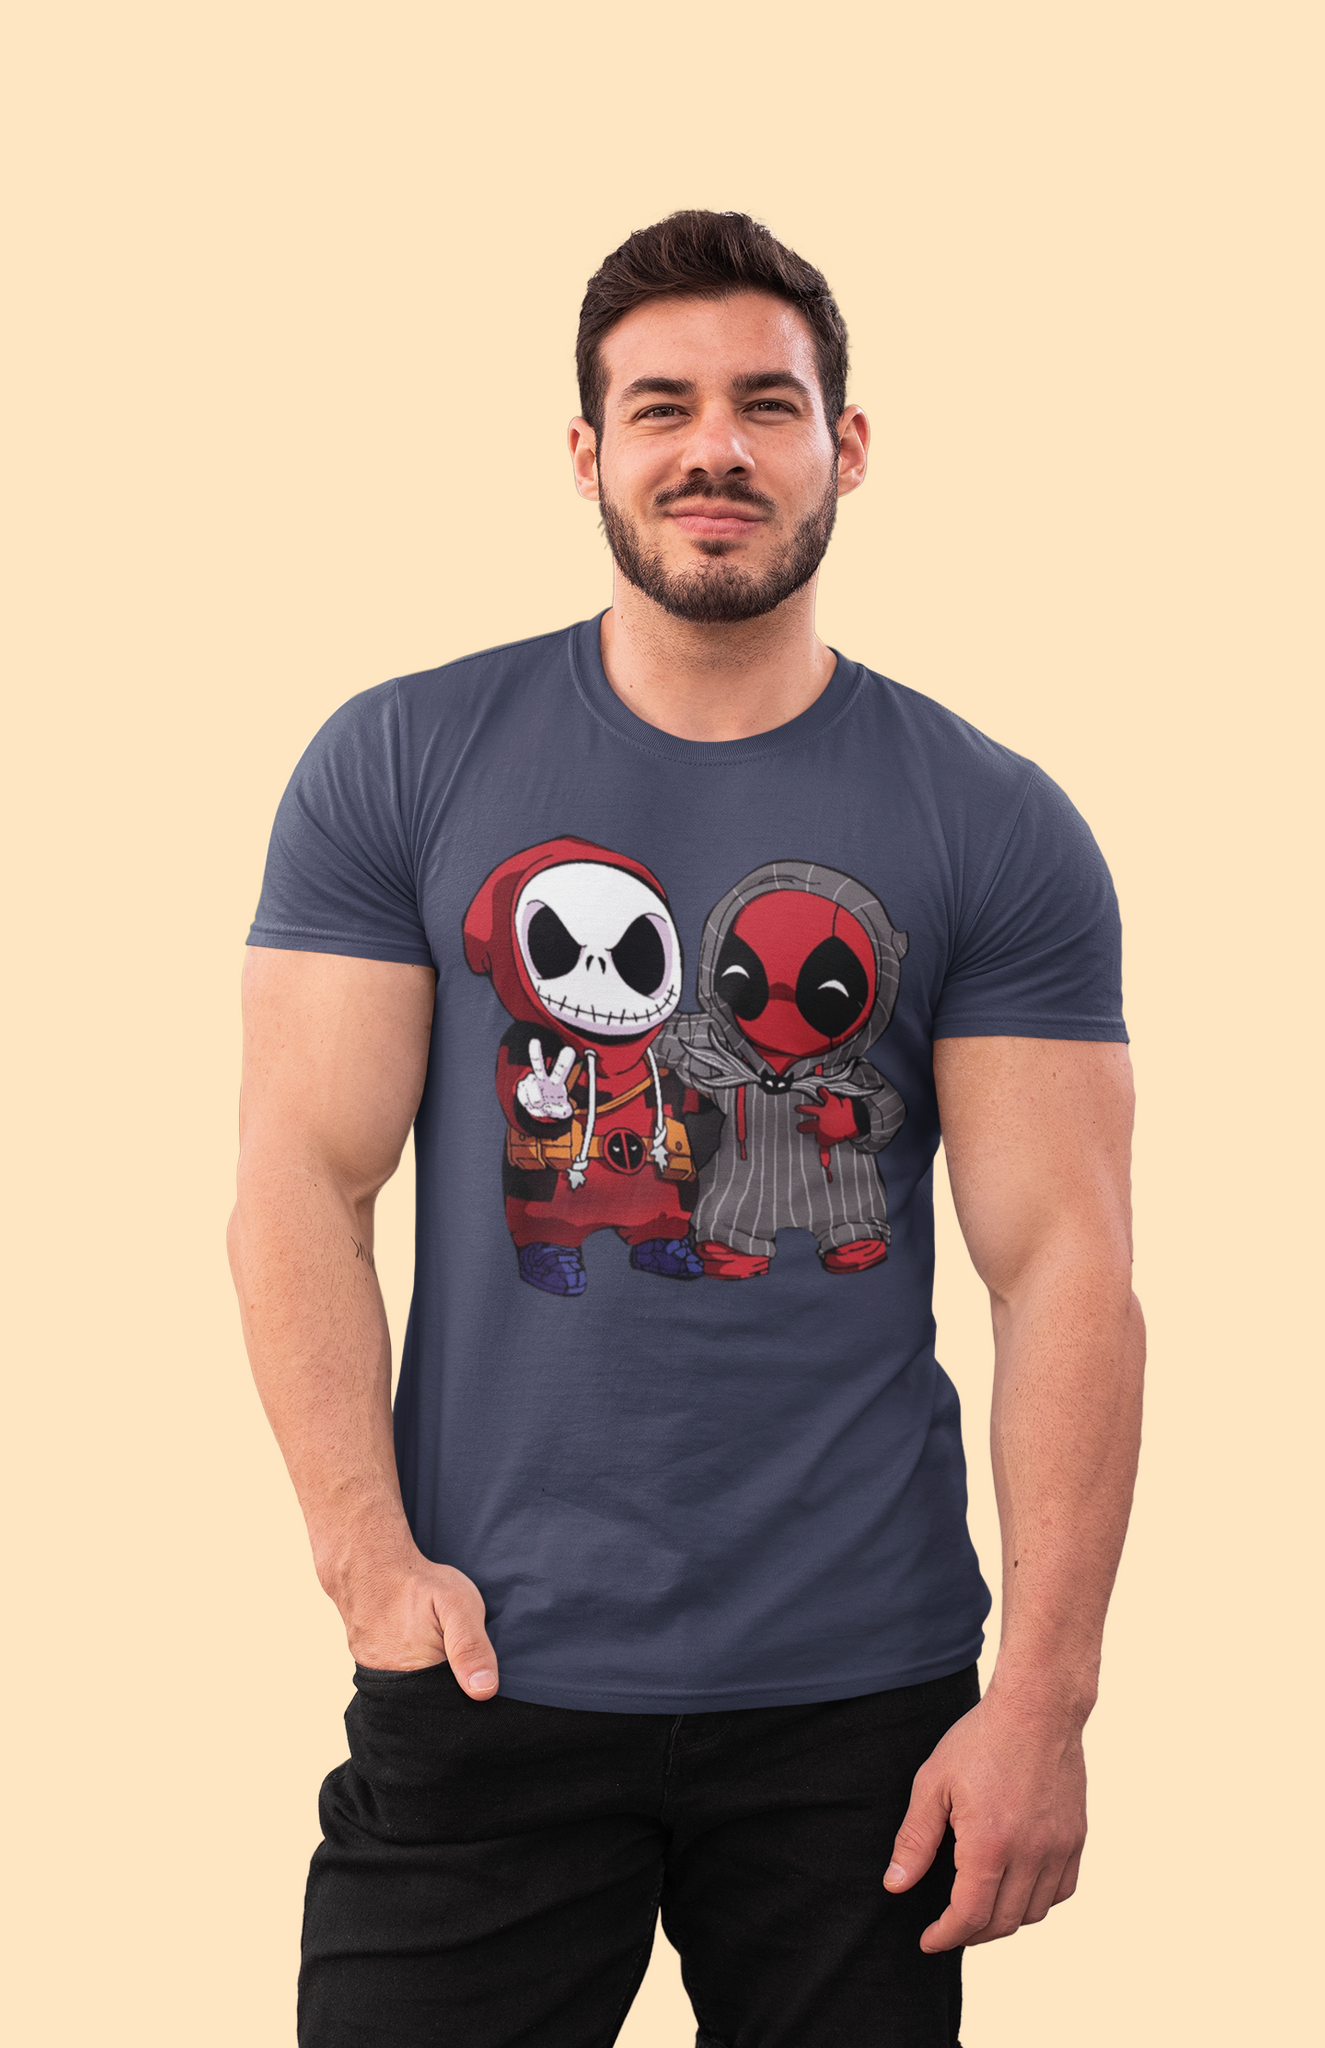 Buy New Van Deadpool Tshirt - ZANIAZ